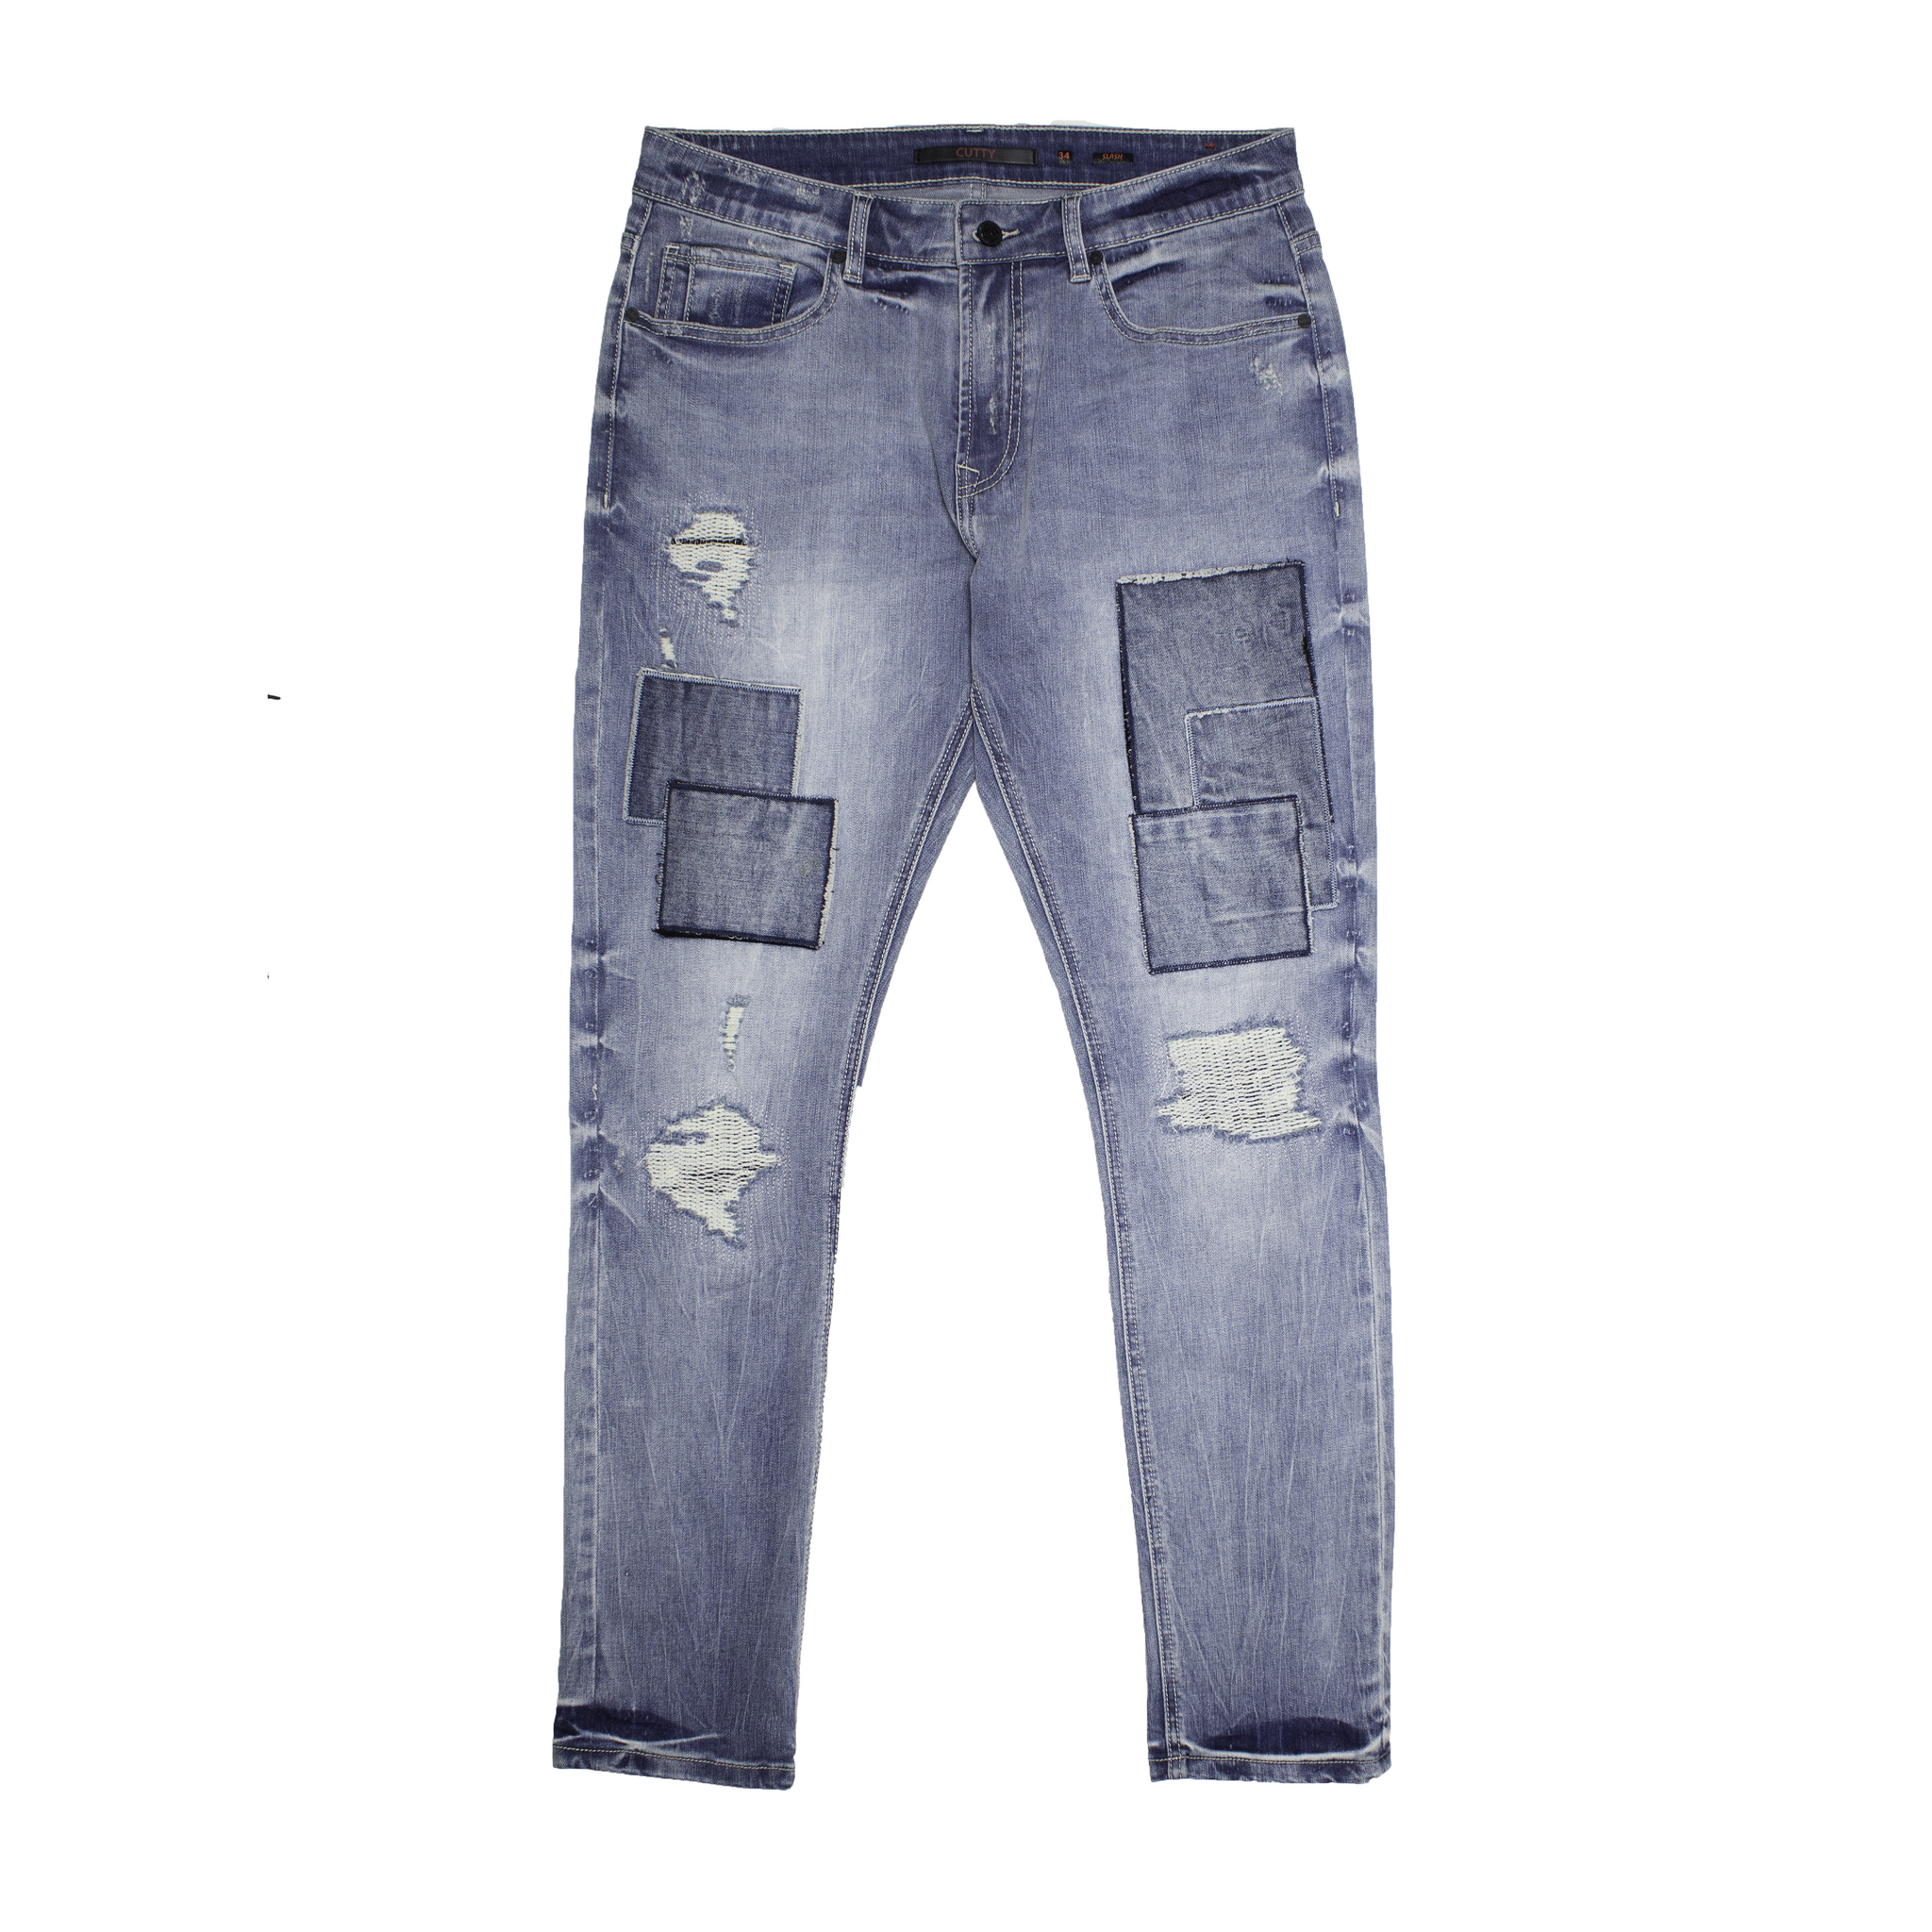 Cutty Denim Jeans sold online by Just Denim_Graham Mens Jeans sold online By Just Denim_R100 Bucks Off Sale_Shop Now_Just Denim South Africa